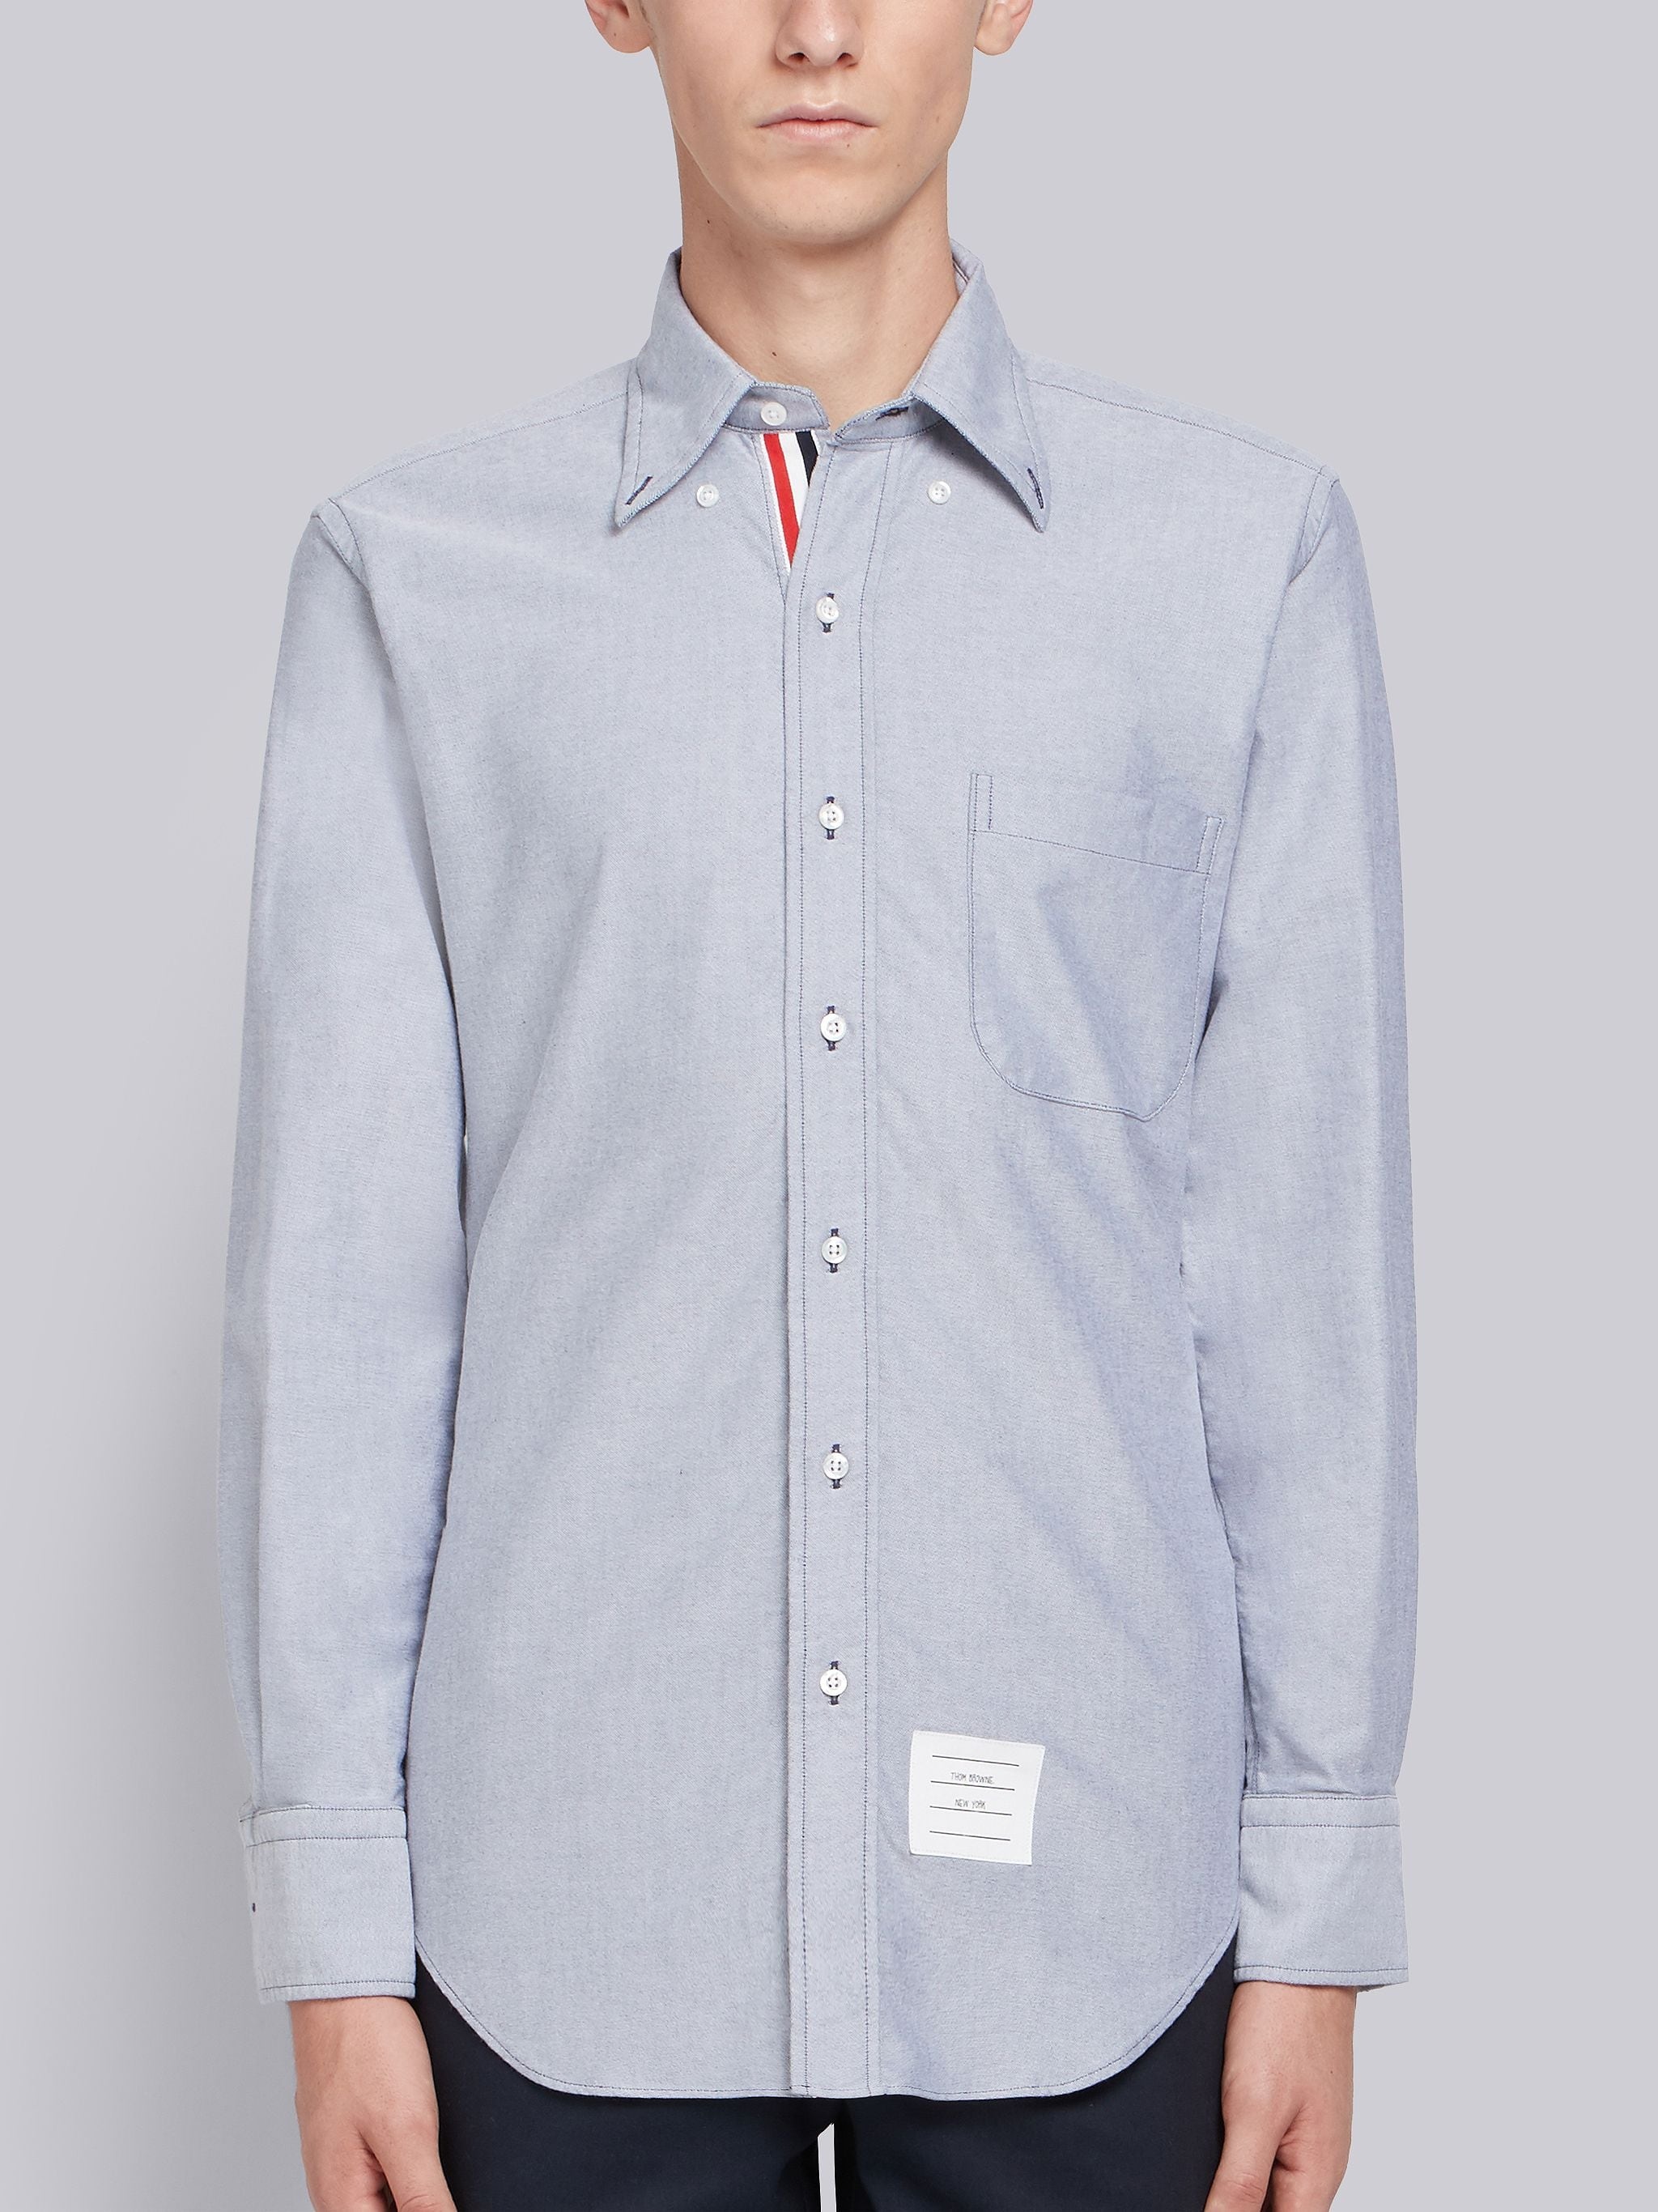 Grosgrain Placket Oxford Shirt - 3